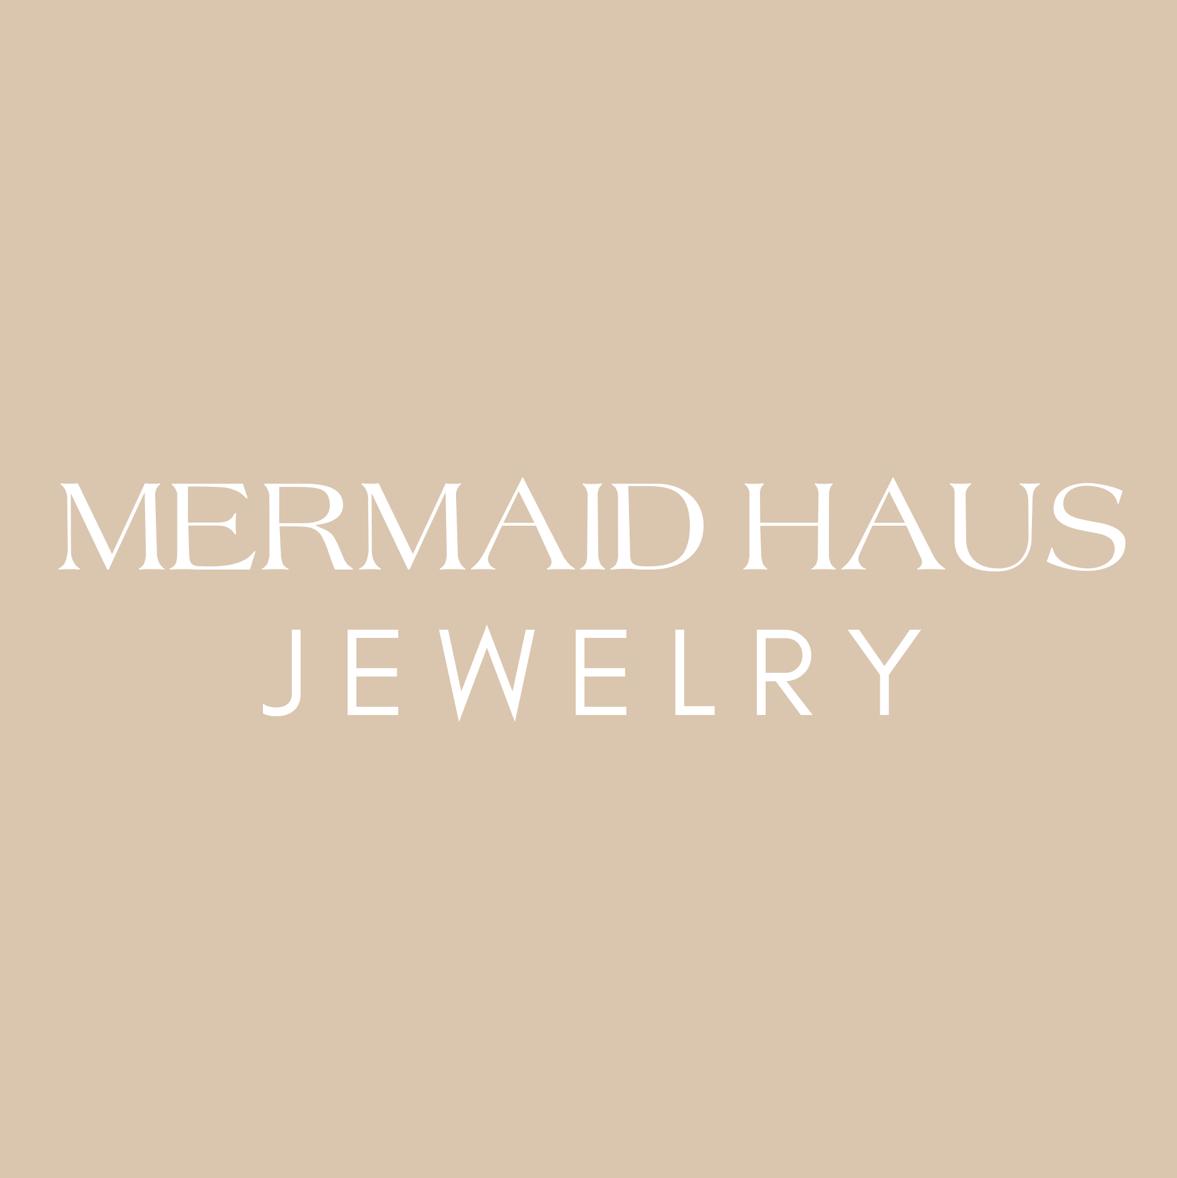 Mermaid Haus's images